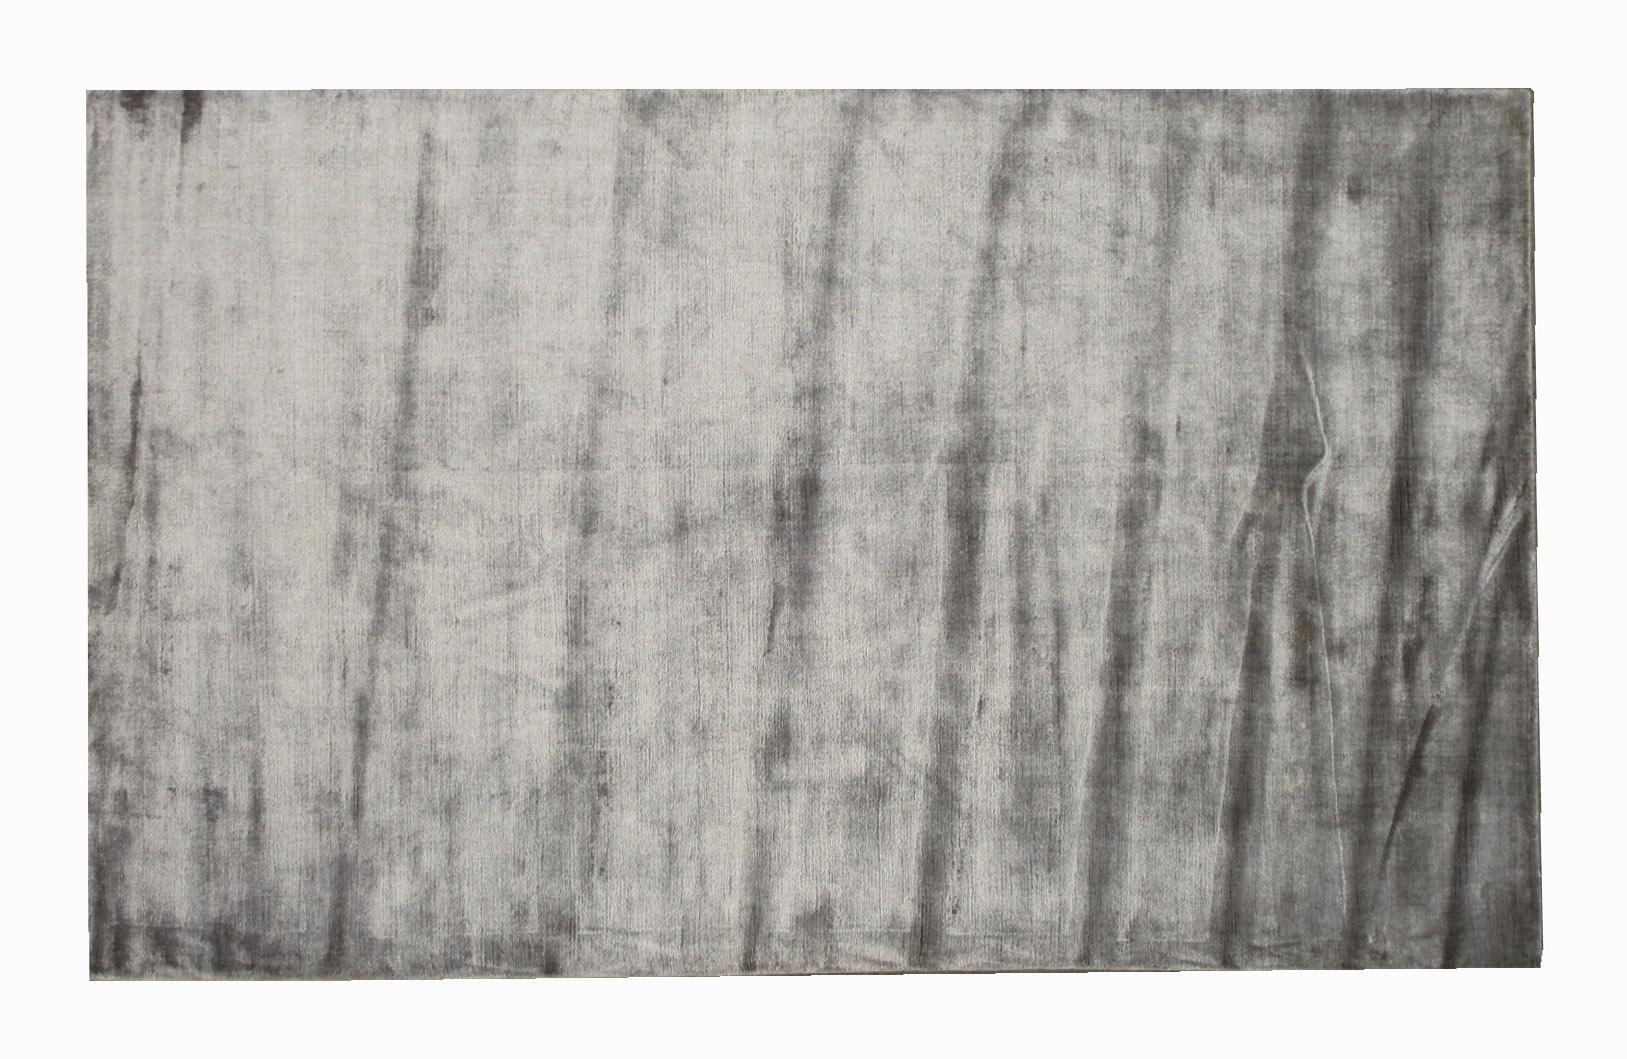 Handmade silk pile on a cotton foundation.

Dimensions: 5' x 8'1